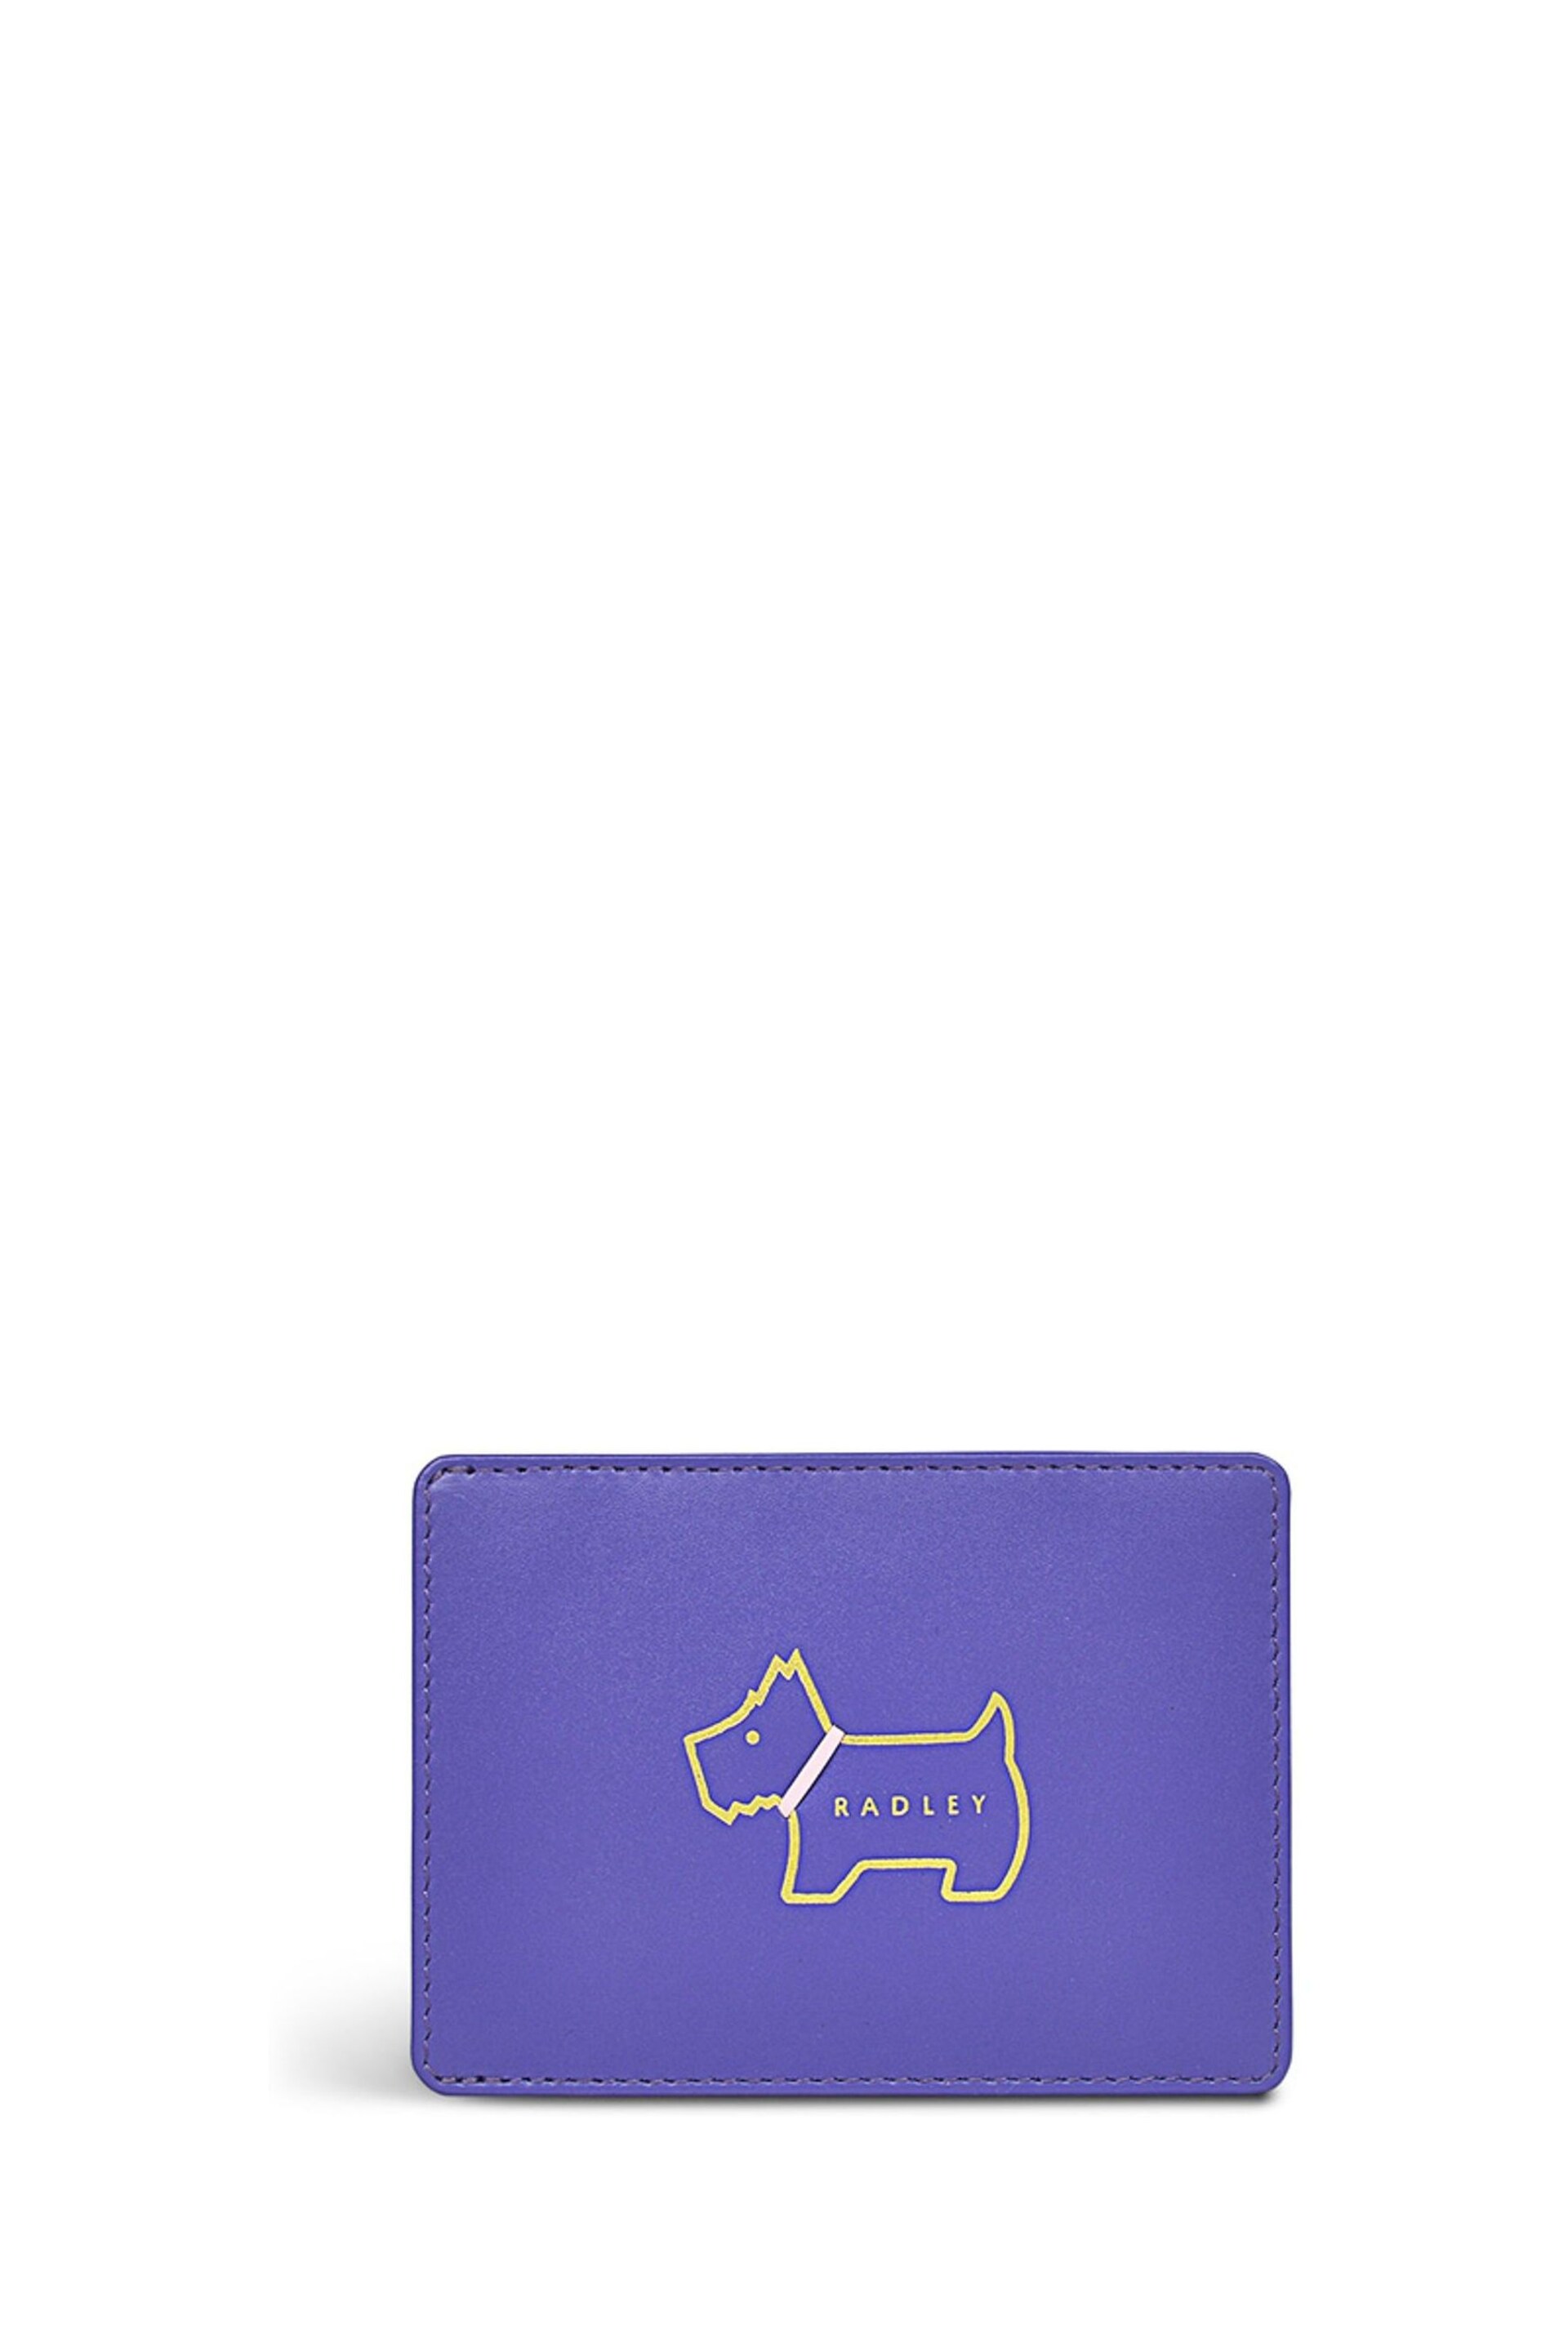 Radley London Small Purple Heritage Dog Outline Travelcard Holder - Image 1 of 3